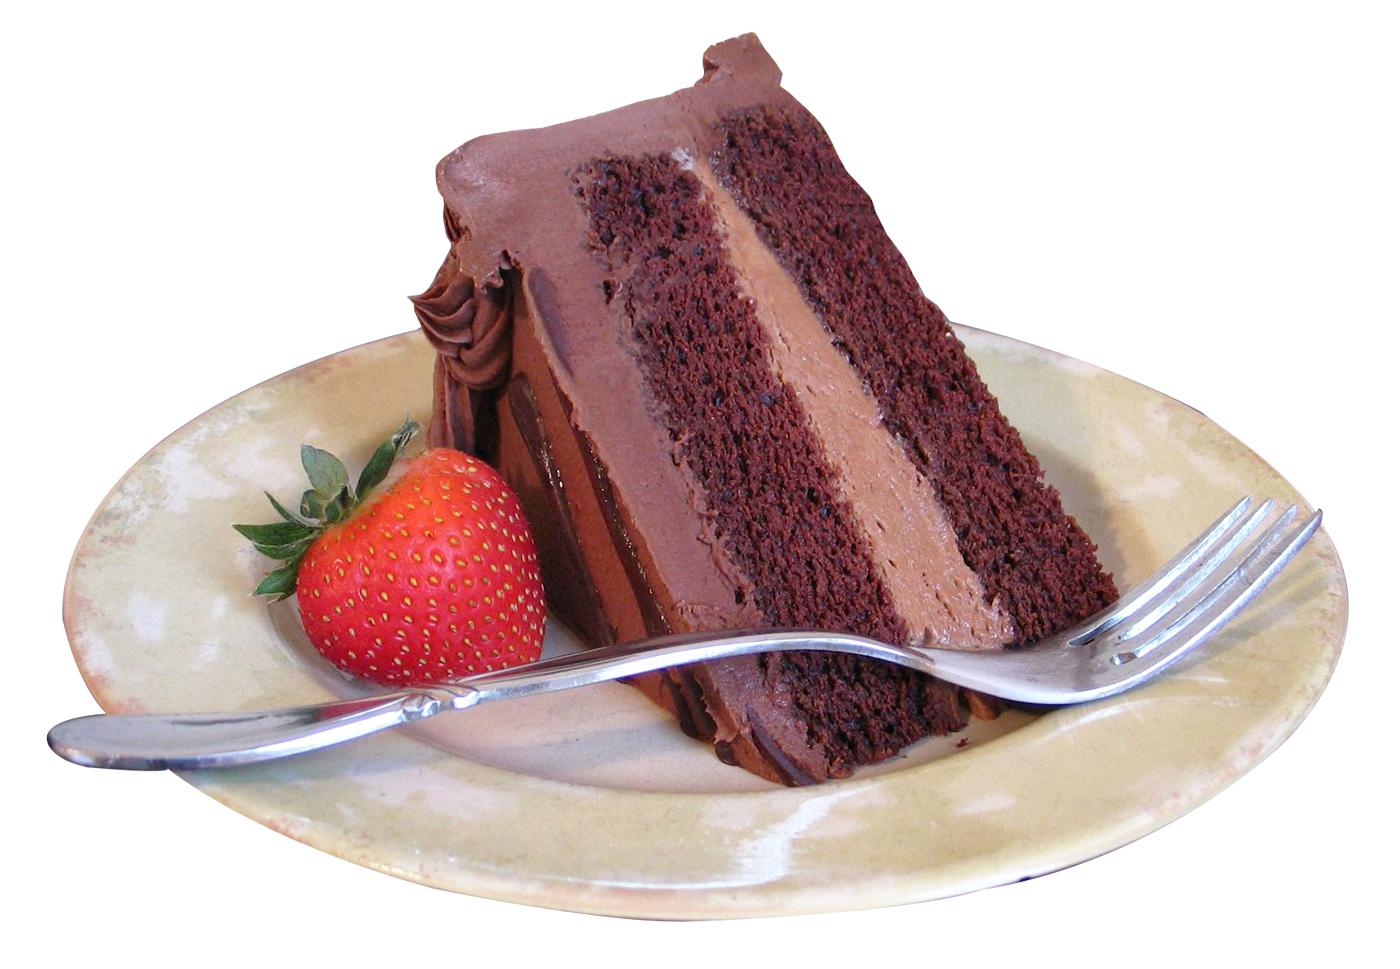 chocolate fake cake slice